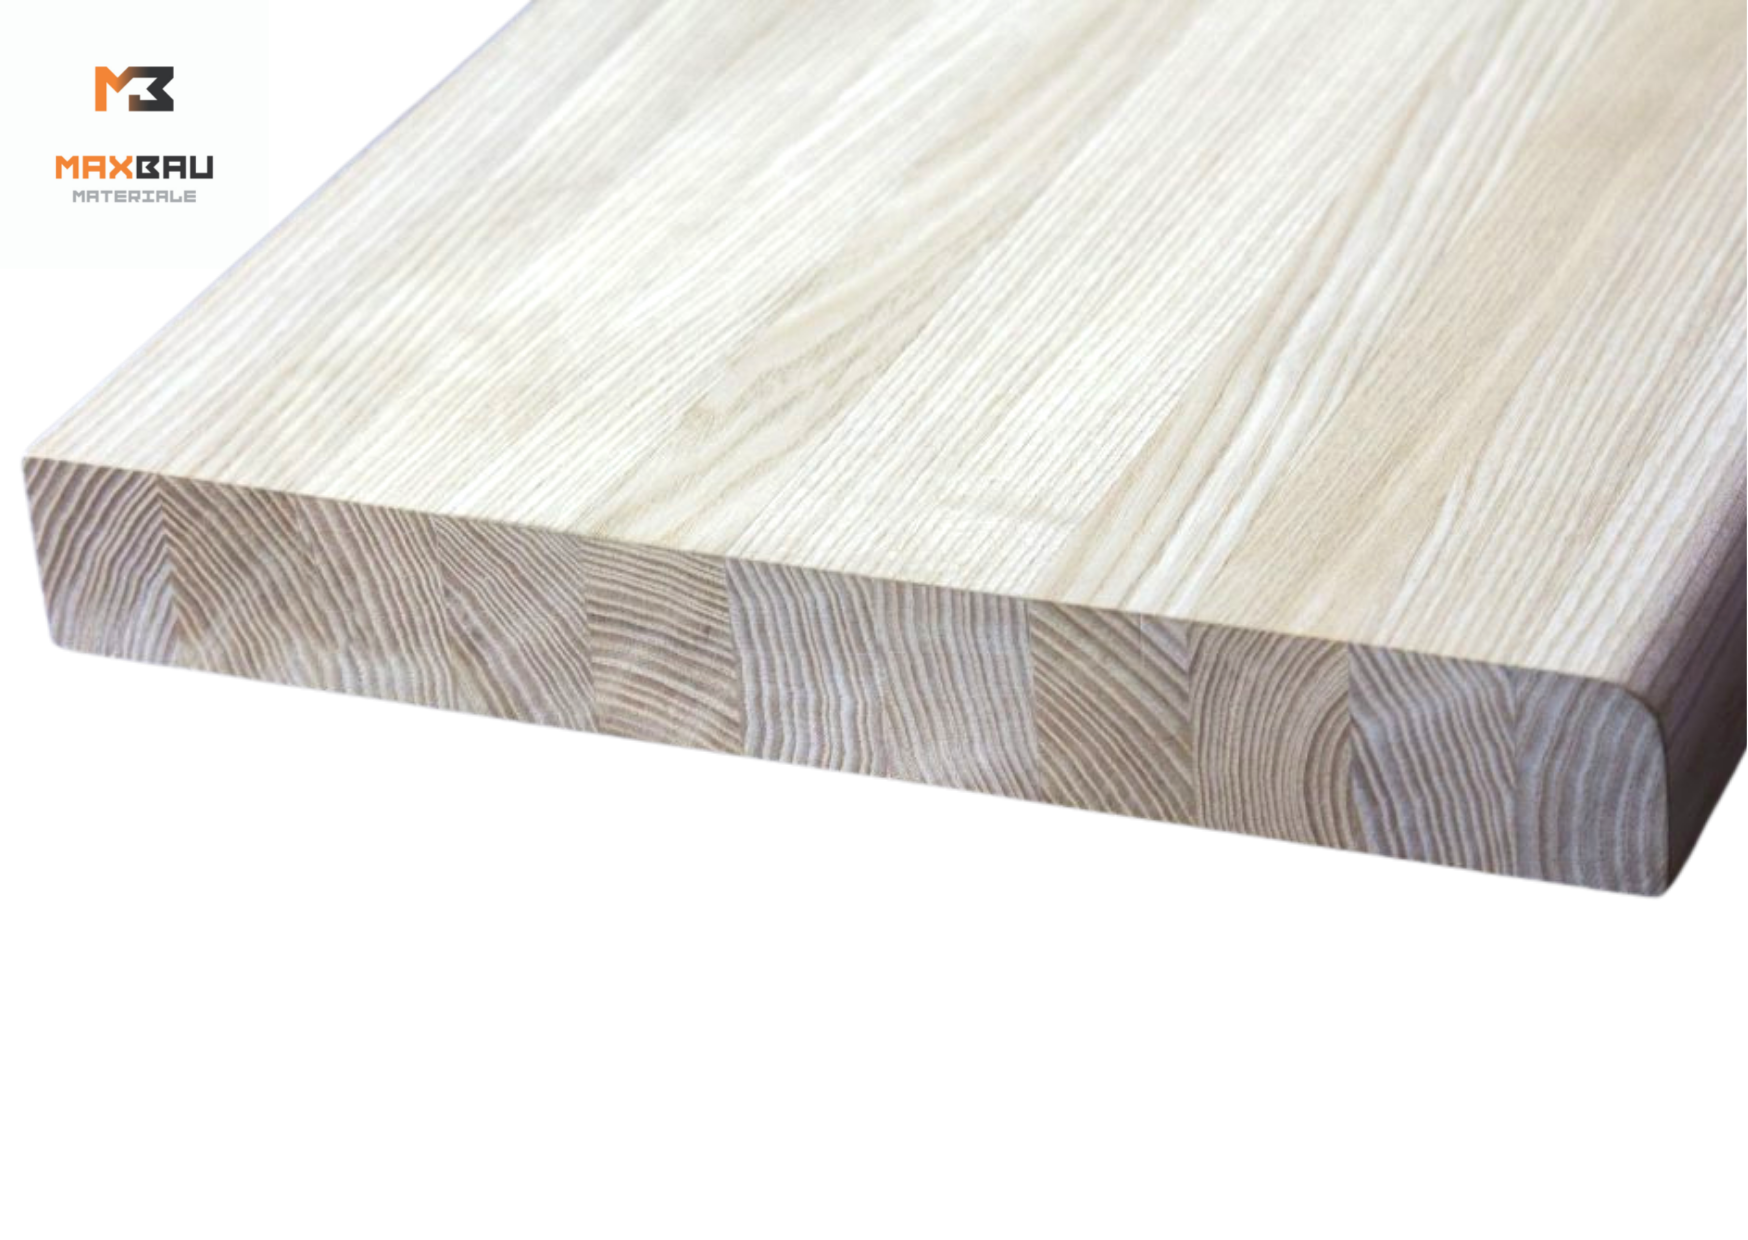 Plates of glued wood - MaxBau wooden plate glued 800 x 400 x 28 mm class AB, https:maxbau.ro